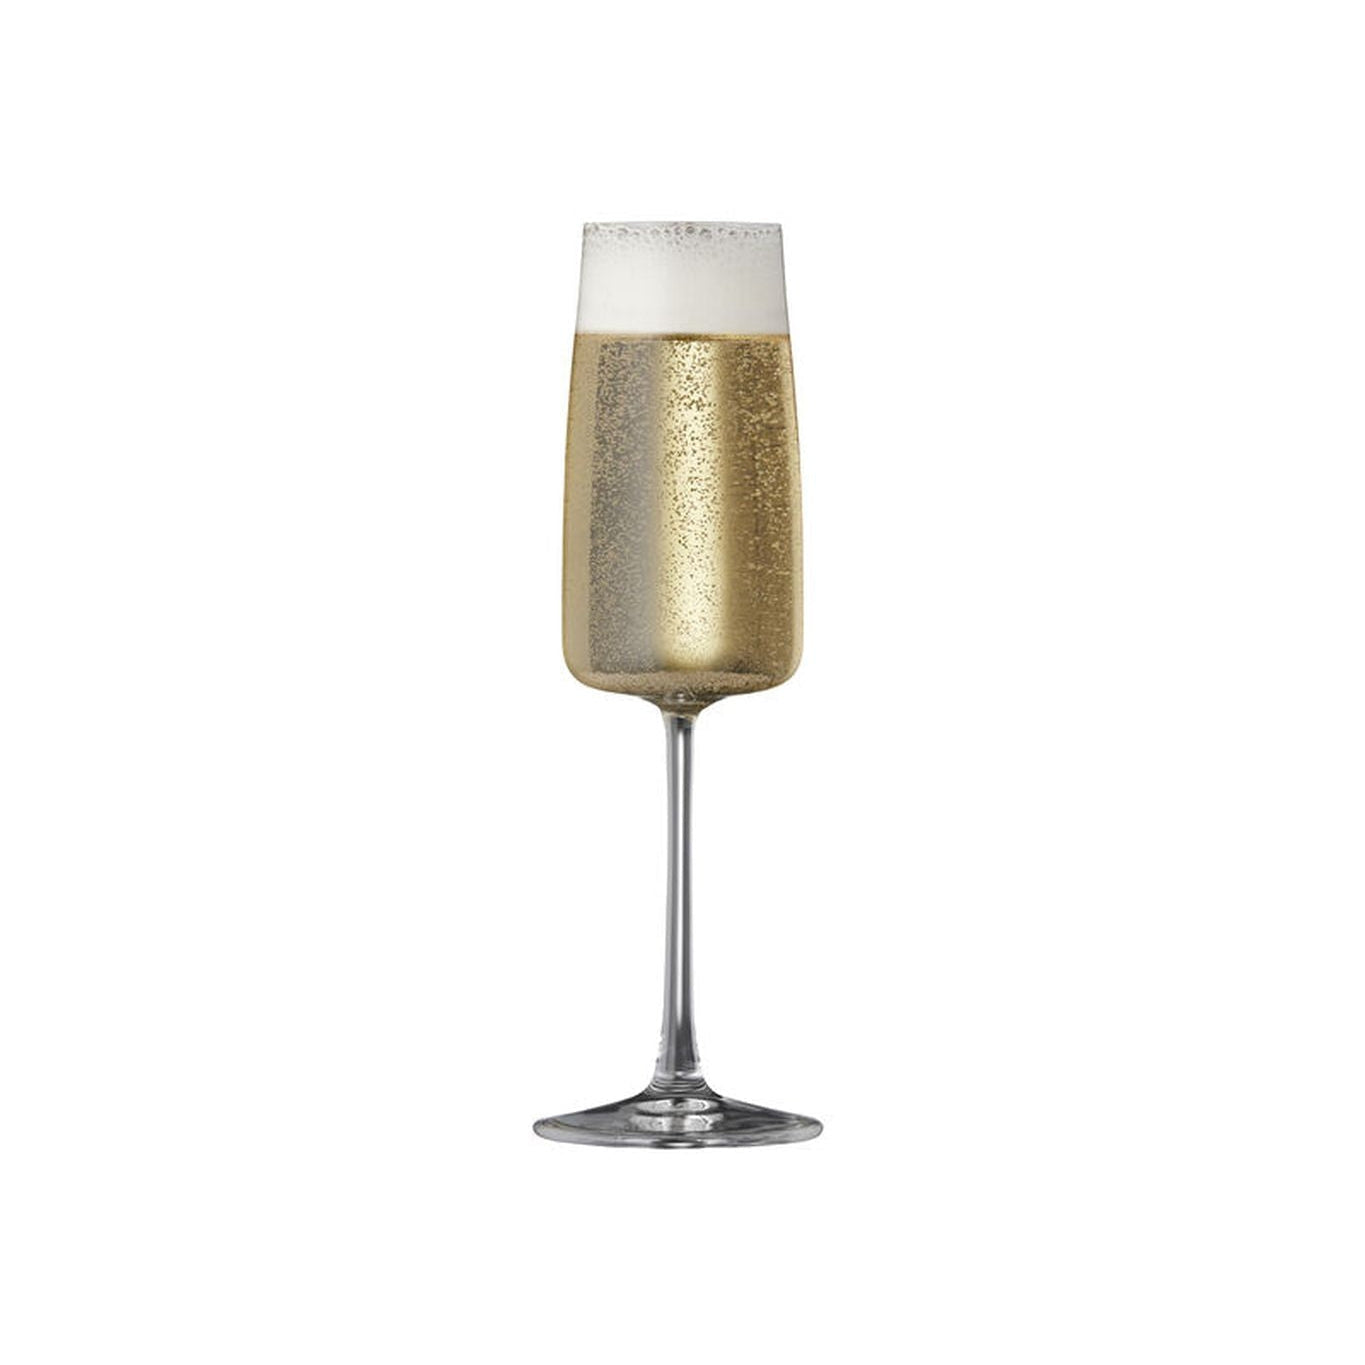 Lyngby Glas Zero Krystal Champagne Glass 30 CL, 4 pezzi.